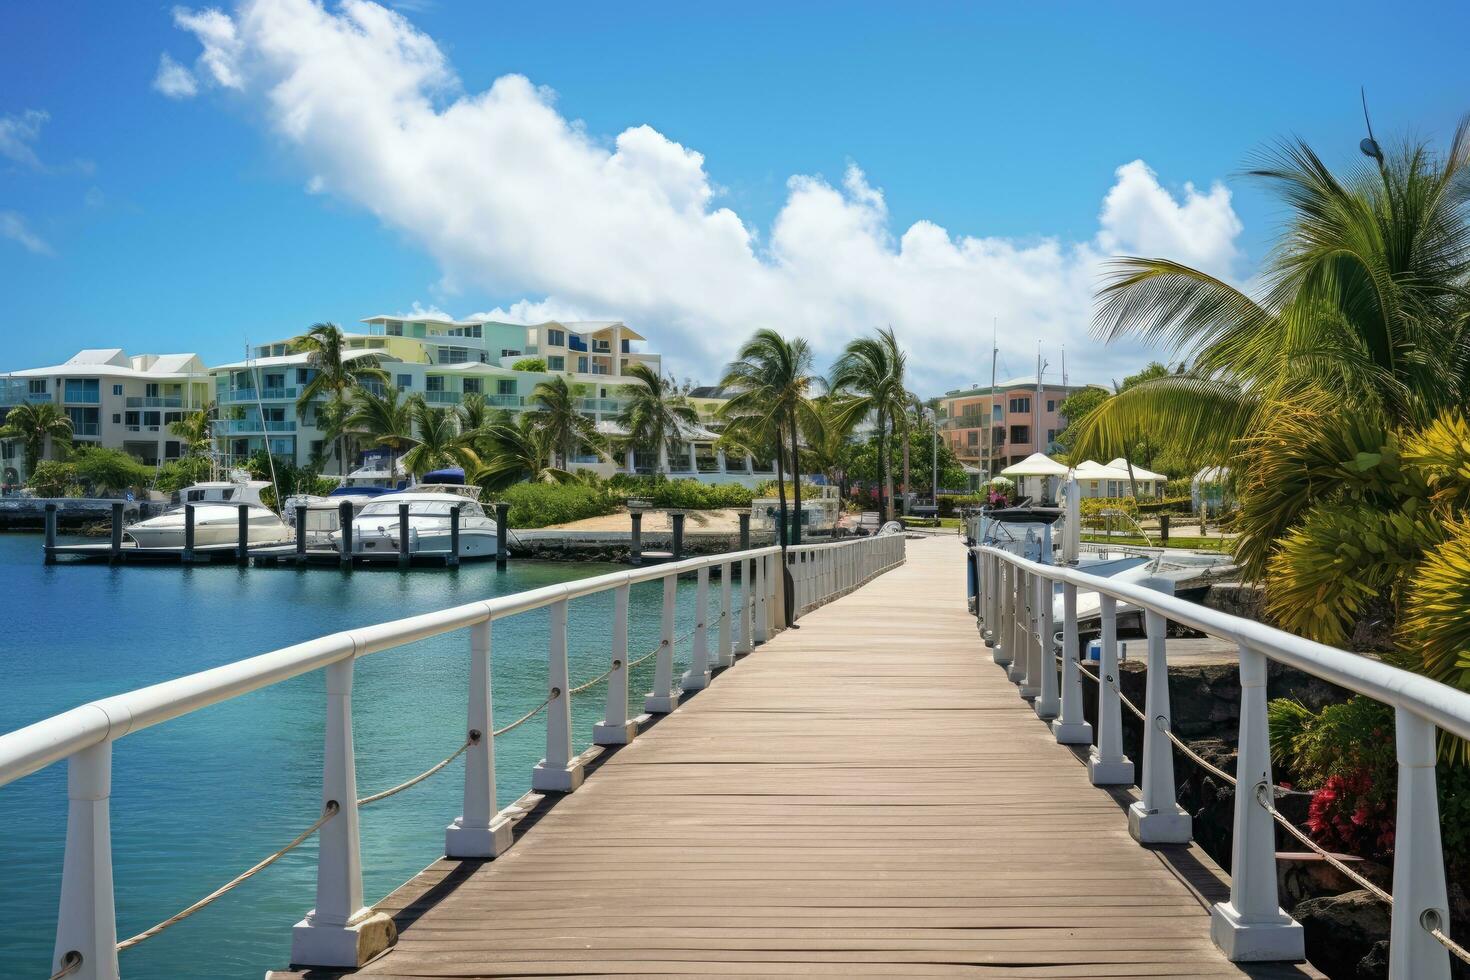 Wooden walkway to the marina with palm trees and boats, Promenade at marina of Bridgetown, Barbados, AI Generated photo